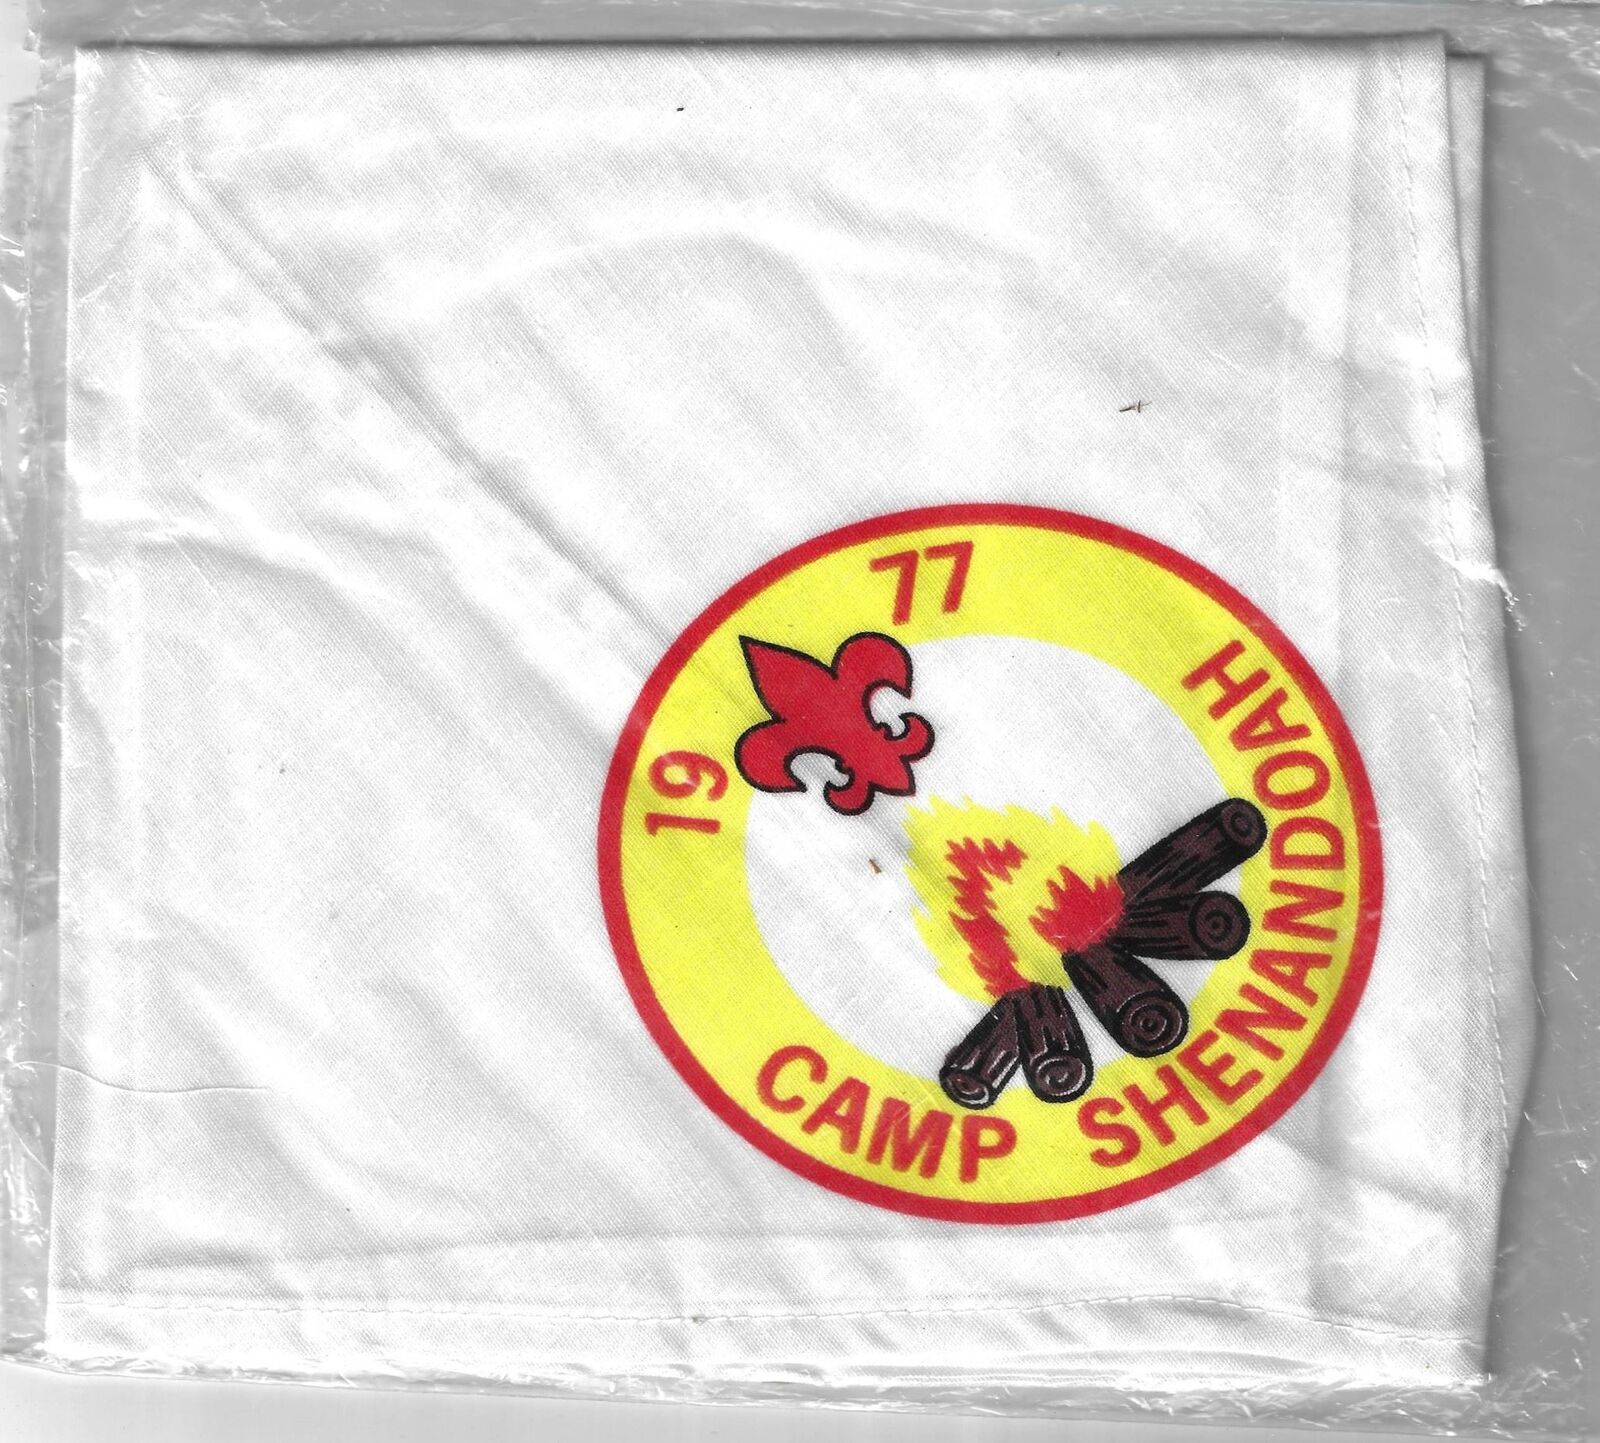 1977 Camp Shenandoah Neckerchief [NC-1911]